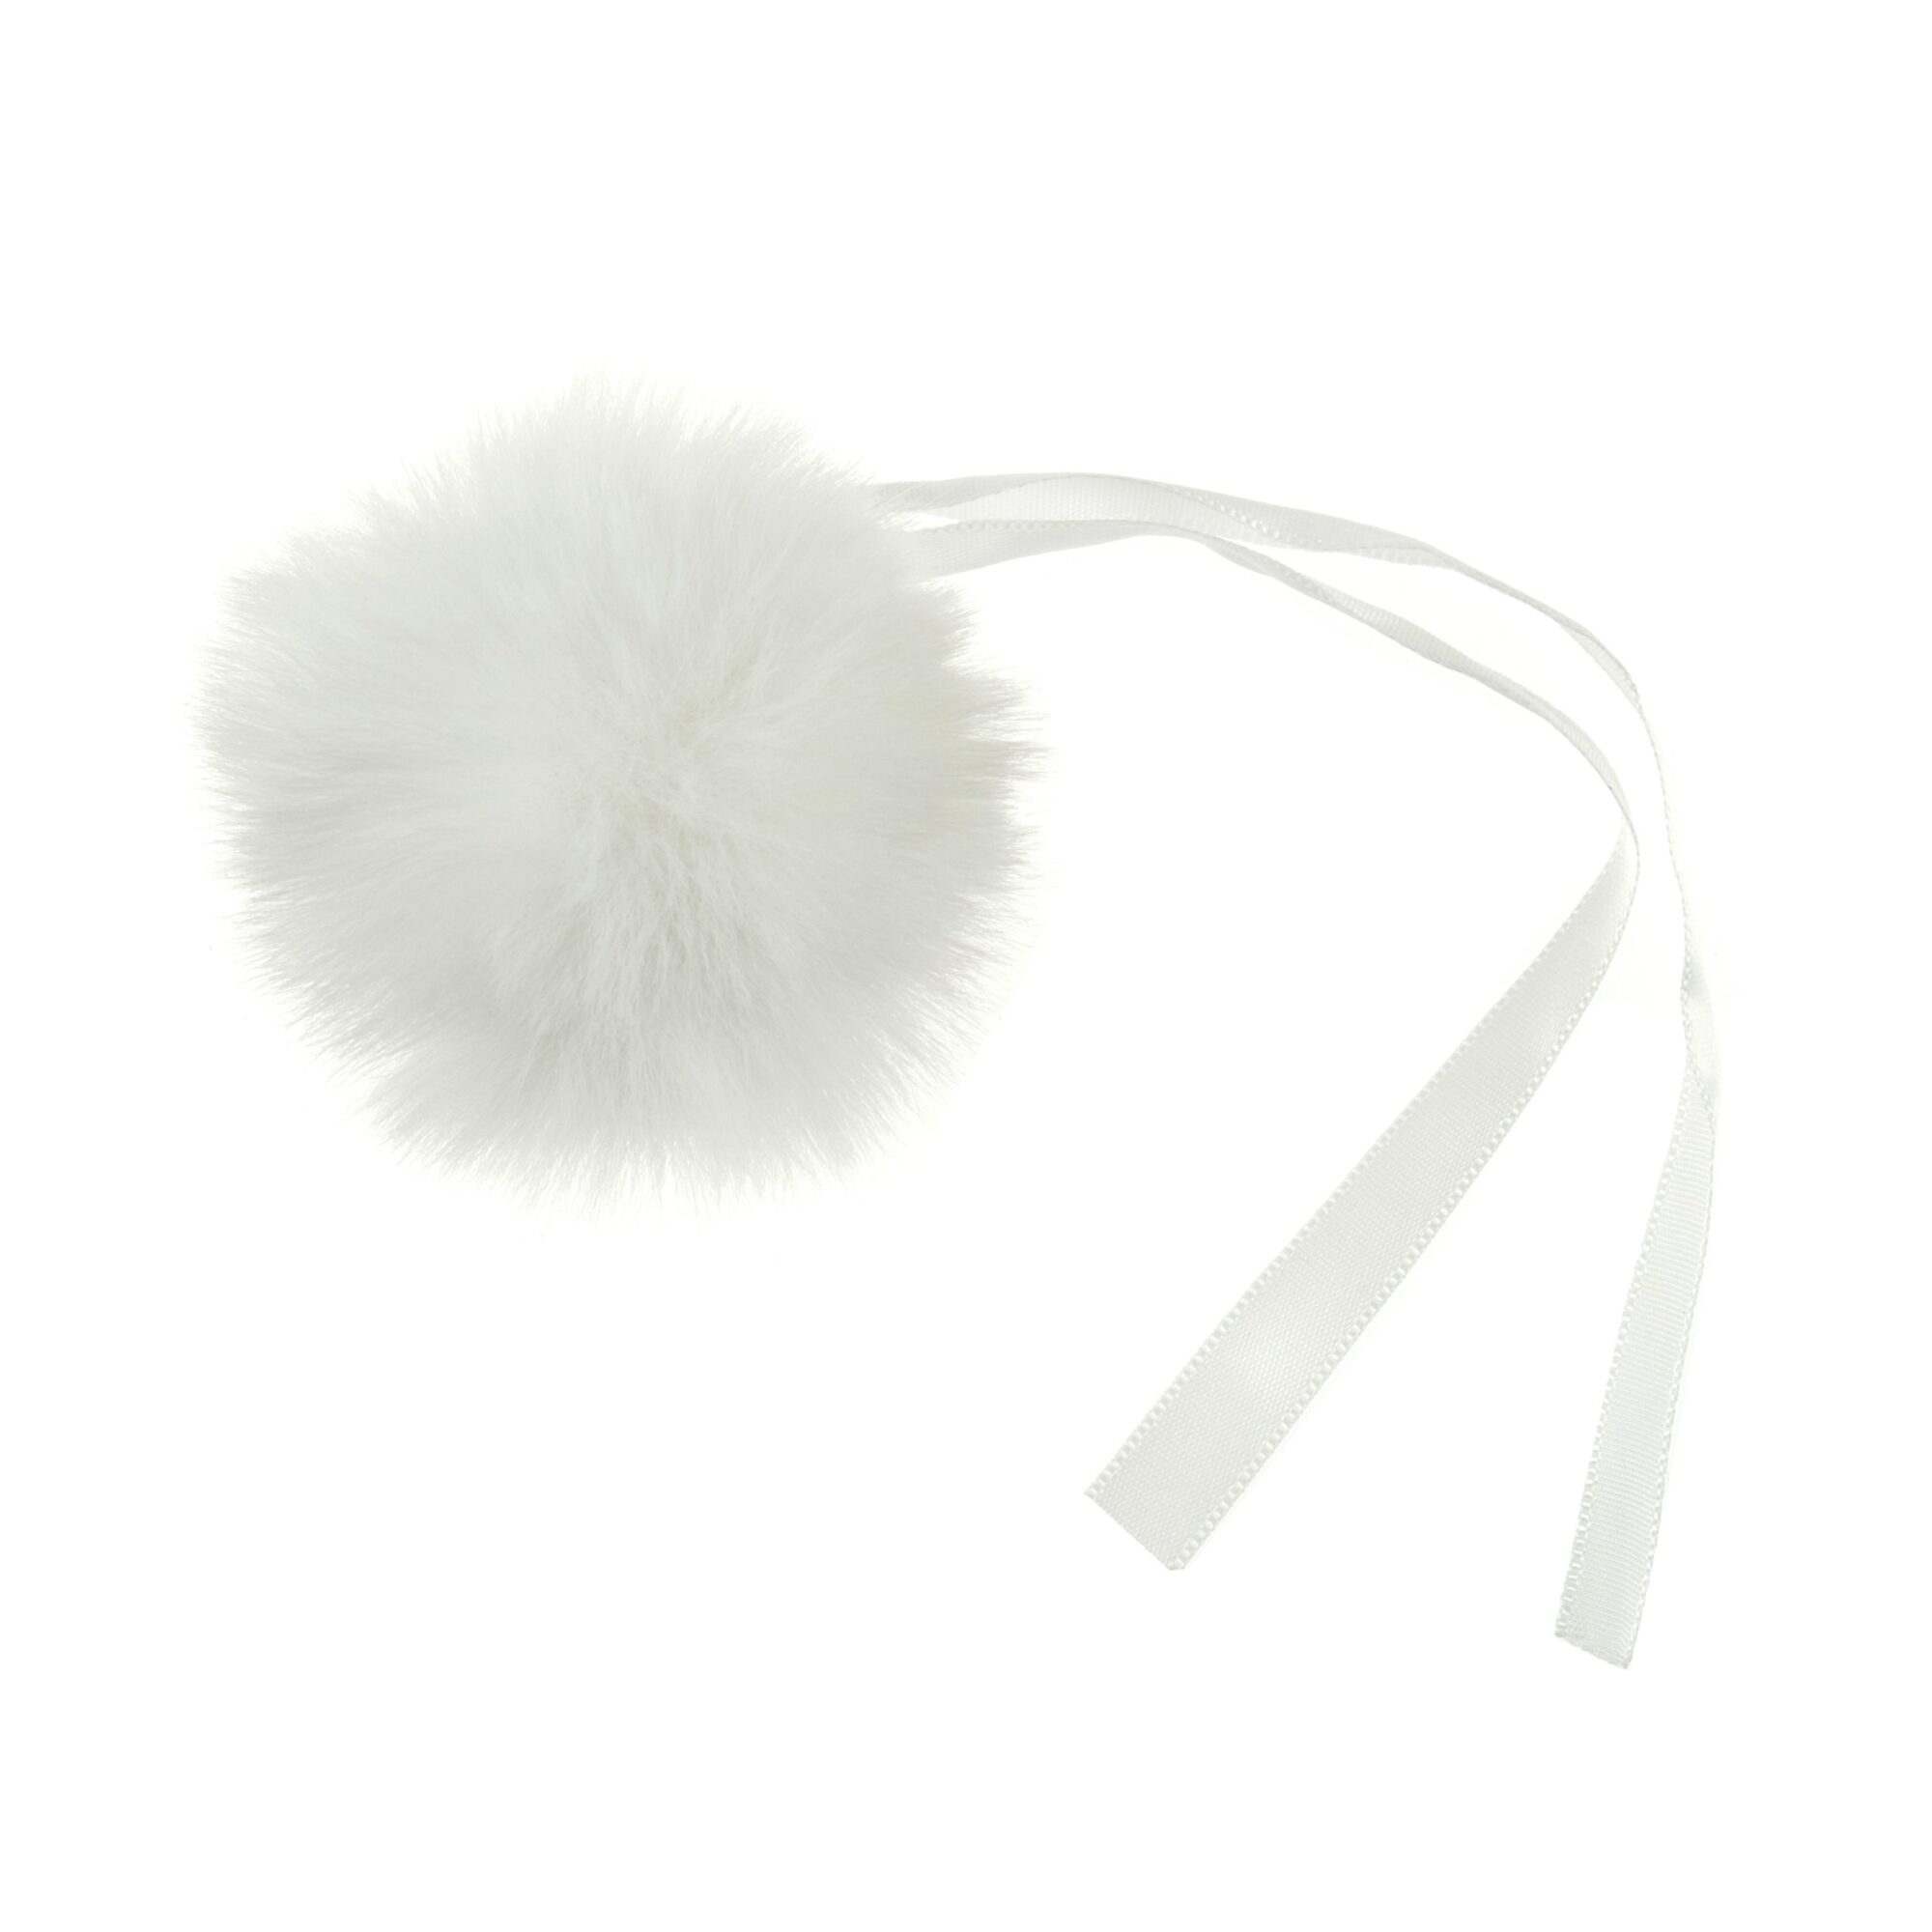 Medium Faux Fur Pom Pom 6cm - White product image